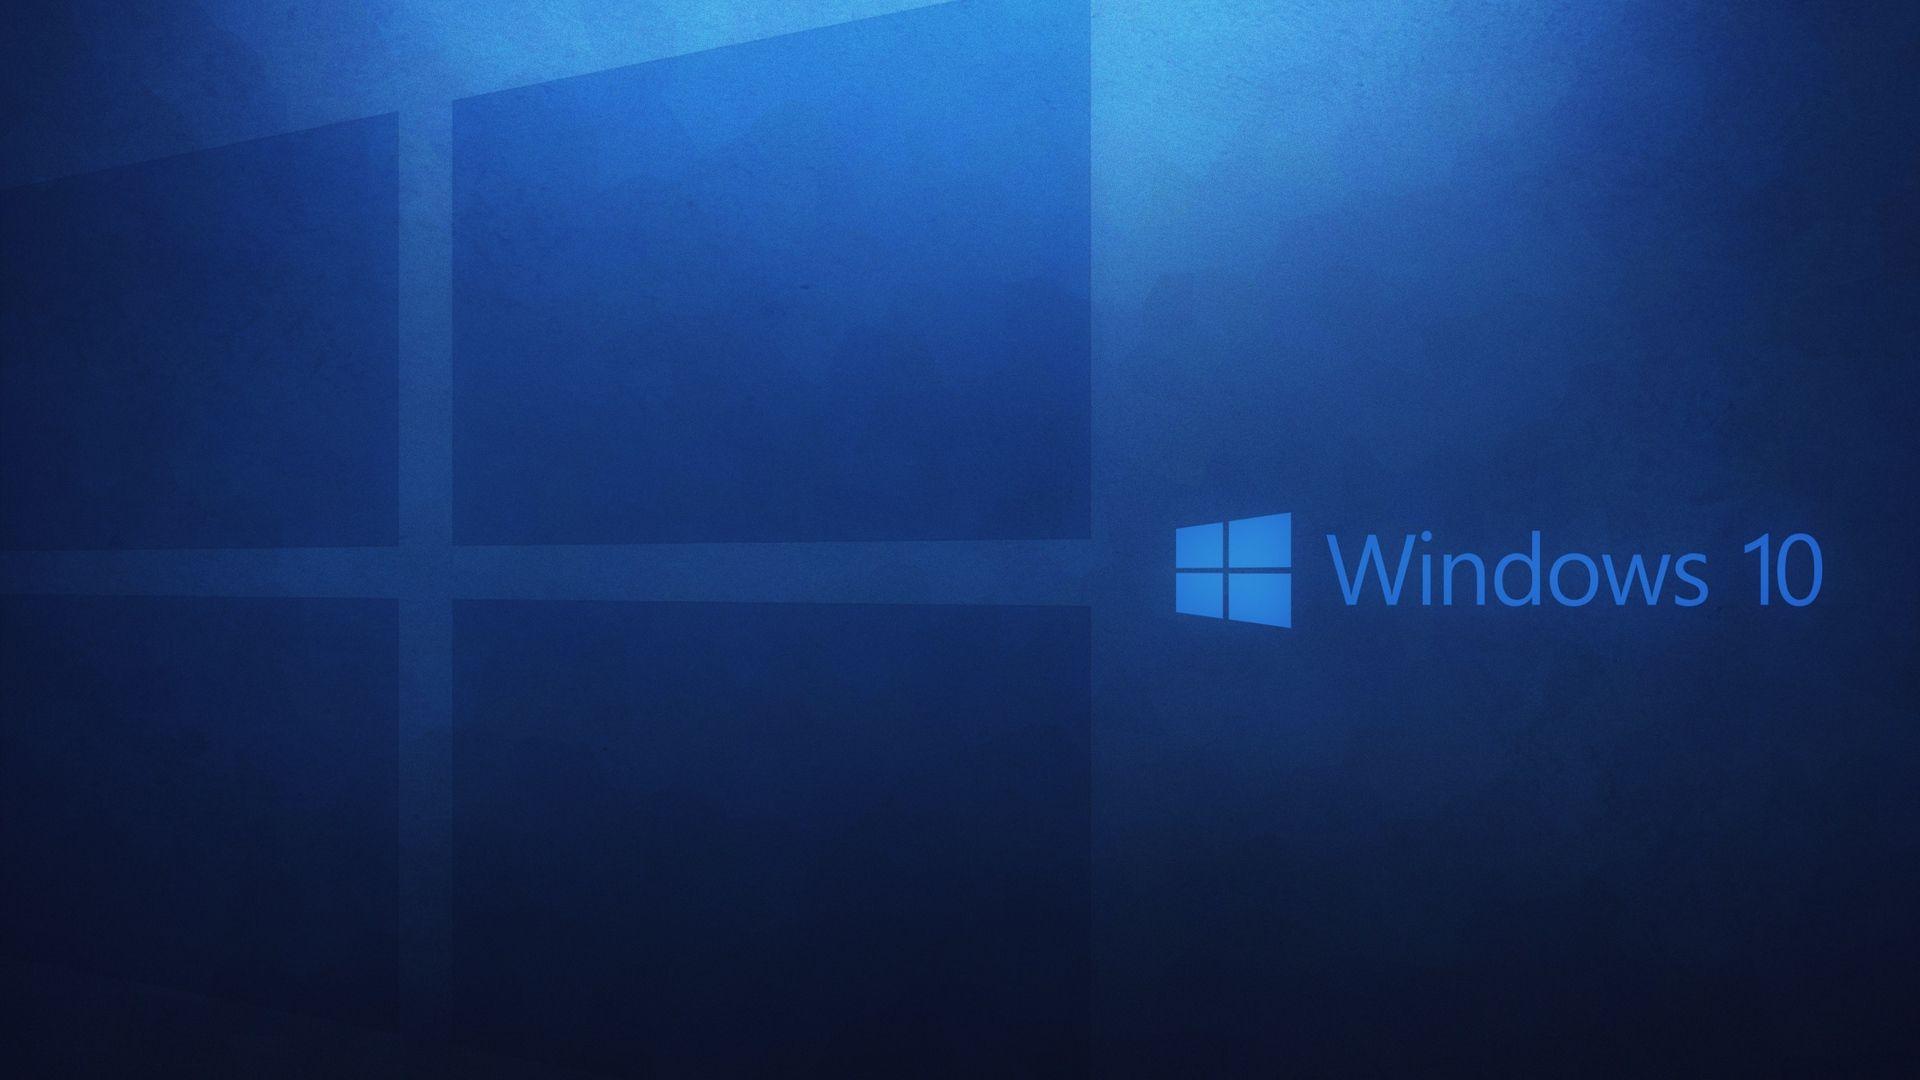 Windows 10 HD Desktop Full Screen Wallpapers - Wallpaper Cave